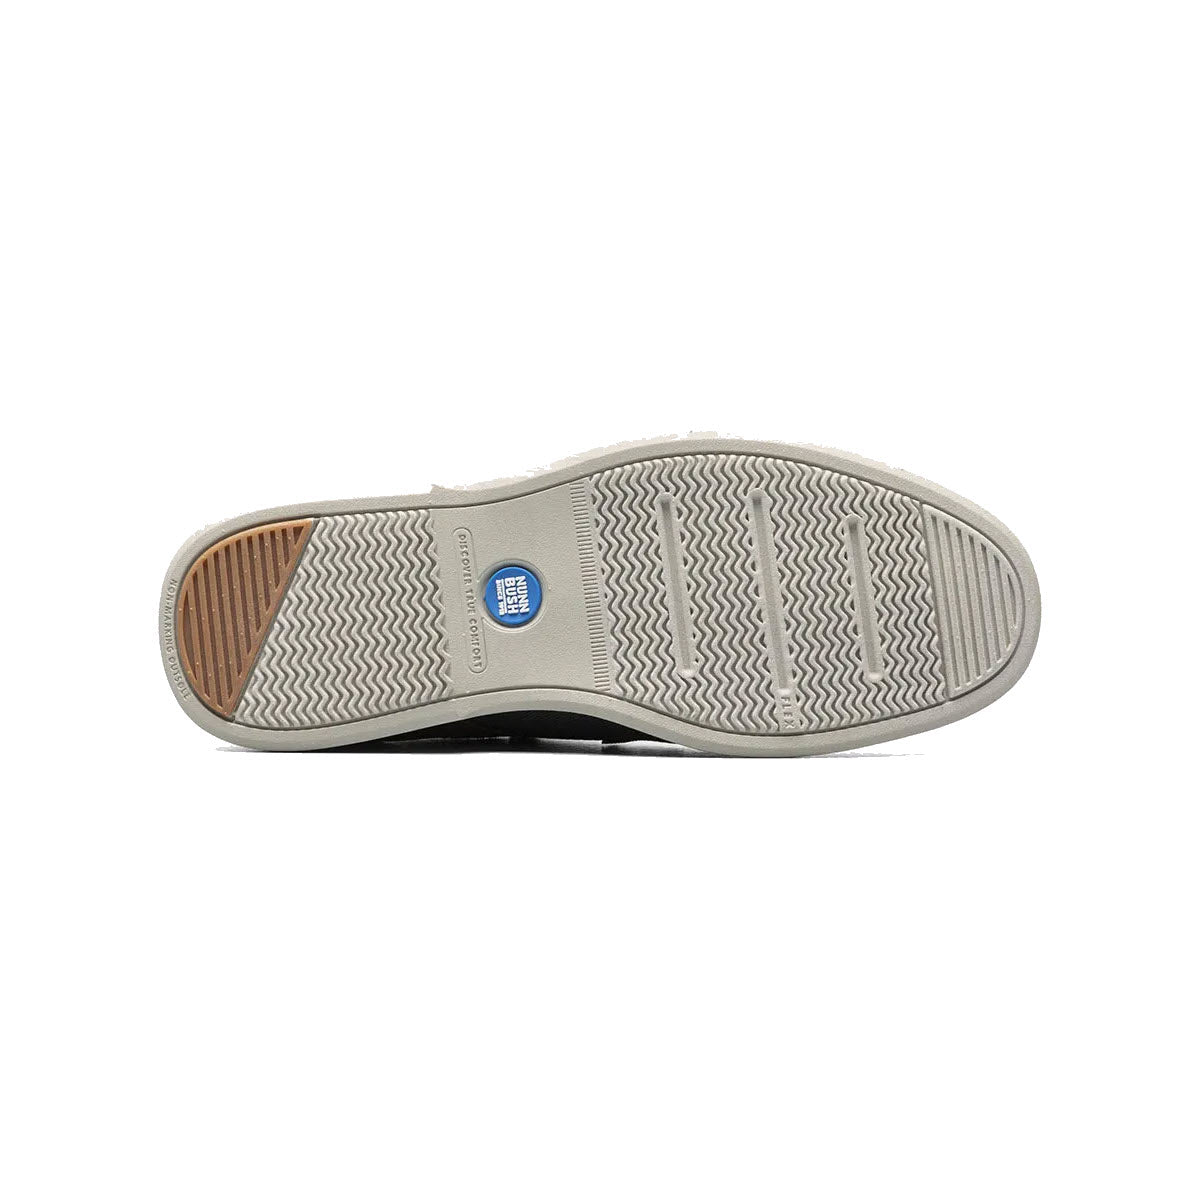 Sole of a light-colored sneaker with zigzag tread pattern and a blue Nunn Bush Otto logo.
Product: Nunn Bush Otto Canvas Plain Toe Oxford Gunmetal - Mens.